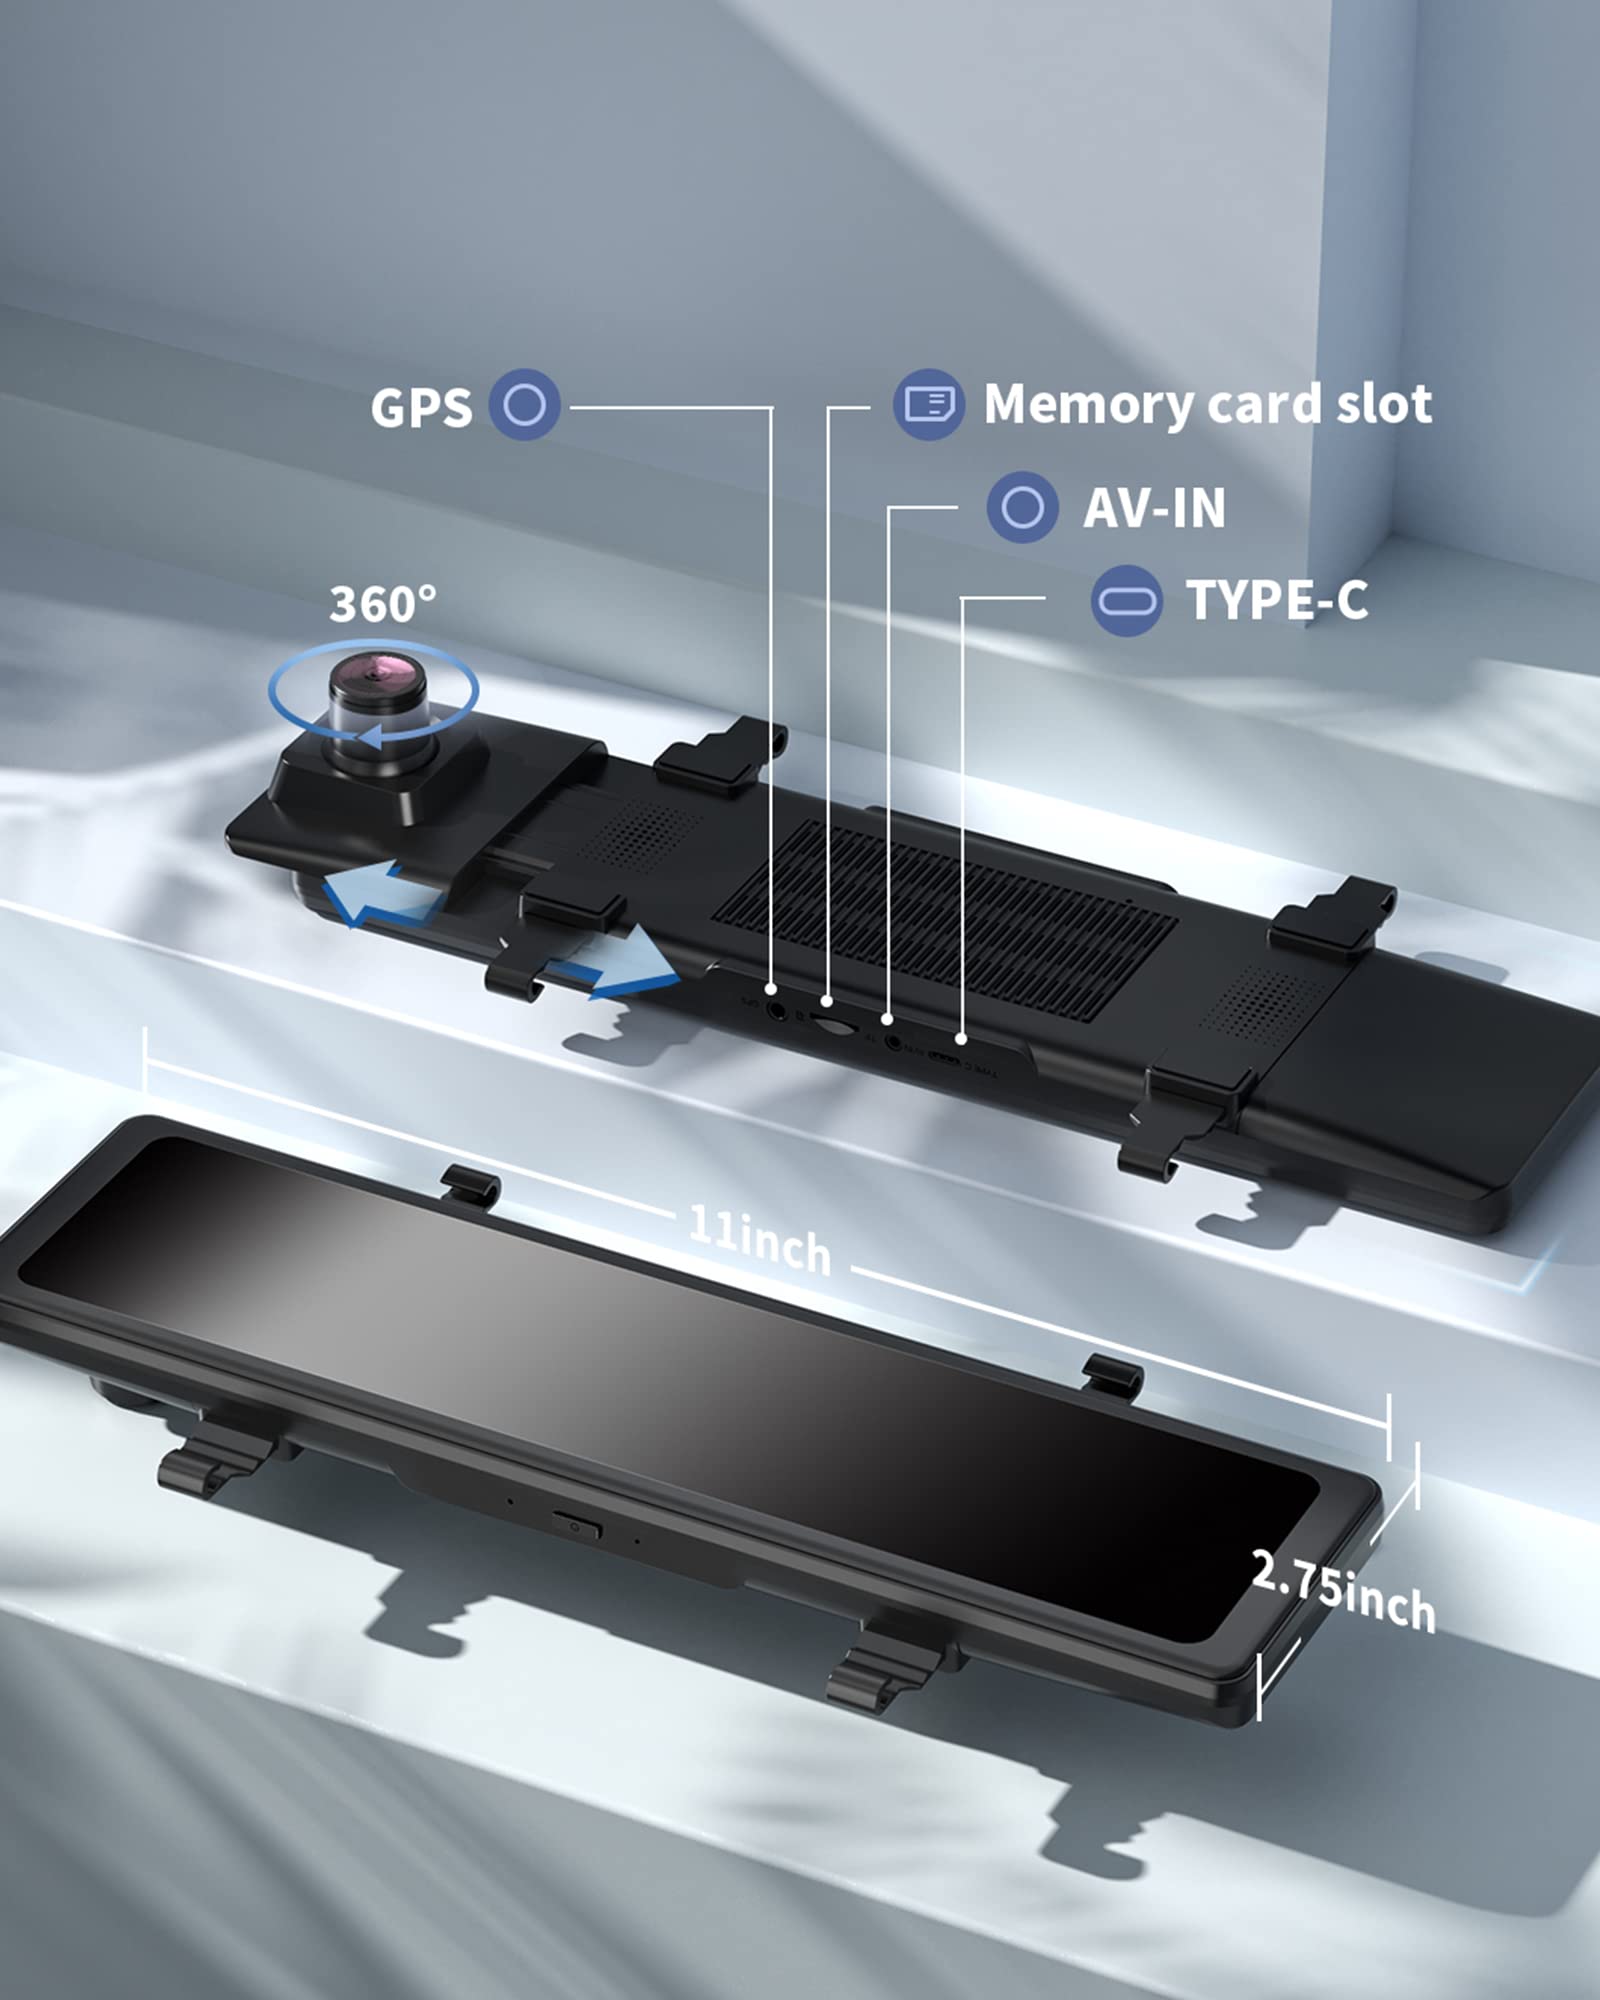 Redtiger T27 4K+2.5K Touchscreen Smart Parking Assist Dash Cam Hot Sales REDTIGER Dash Cam   